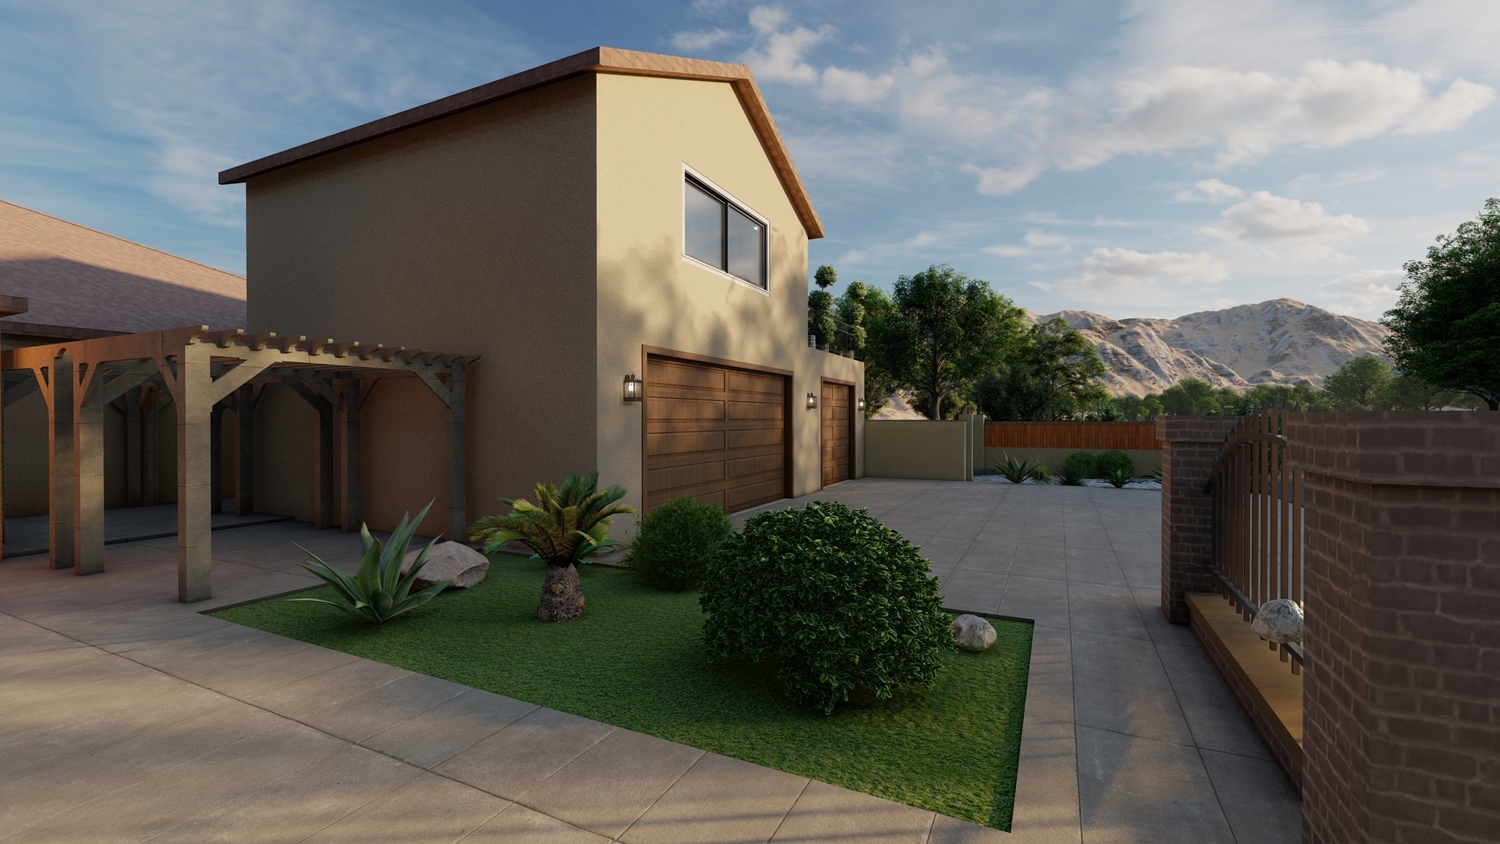 arizona-garage-builders-casita-design34